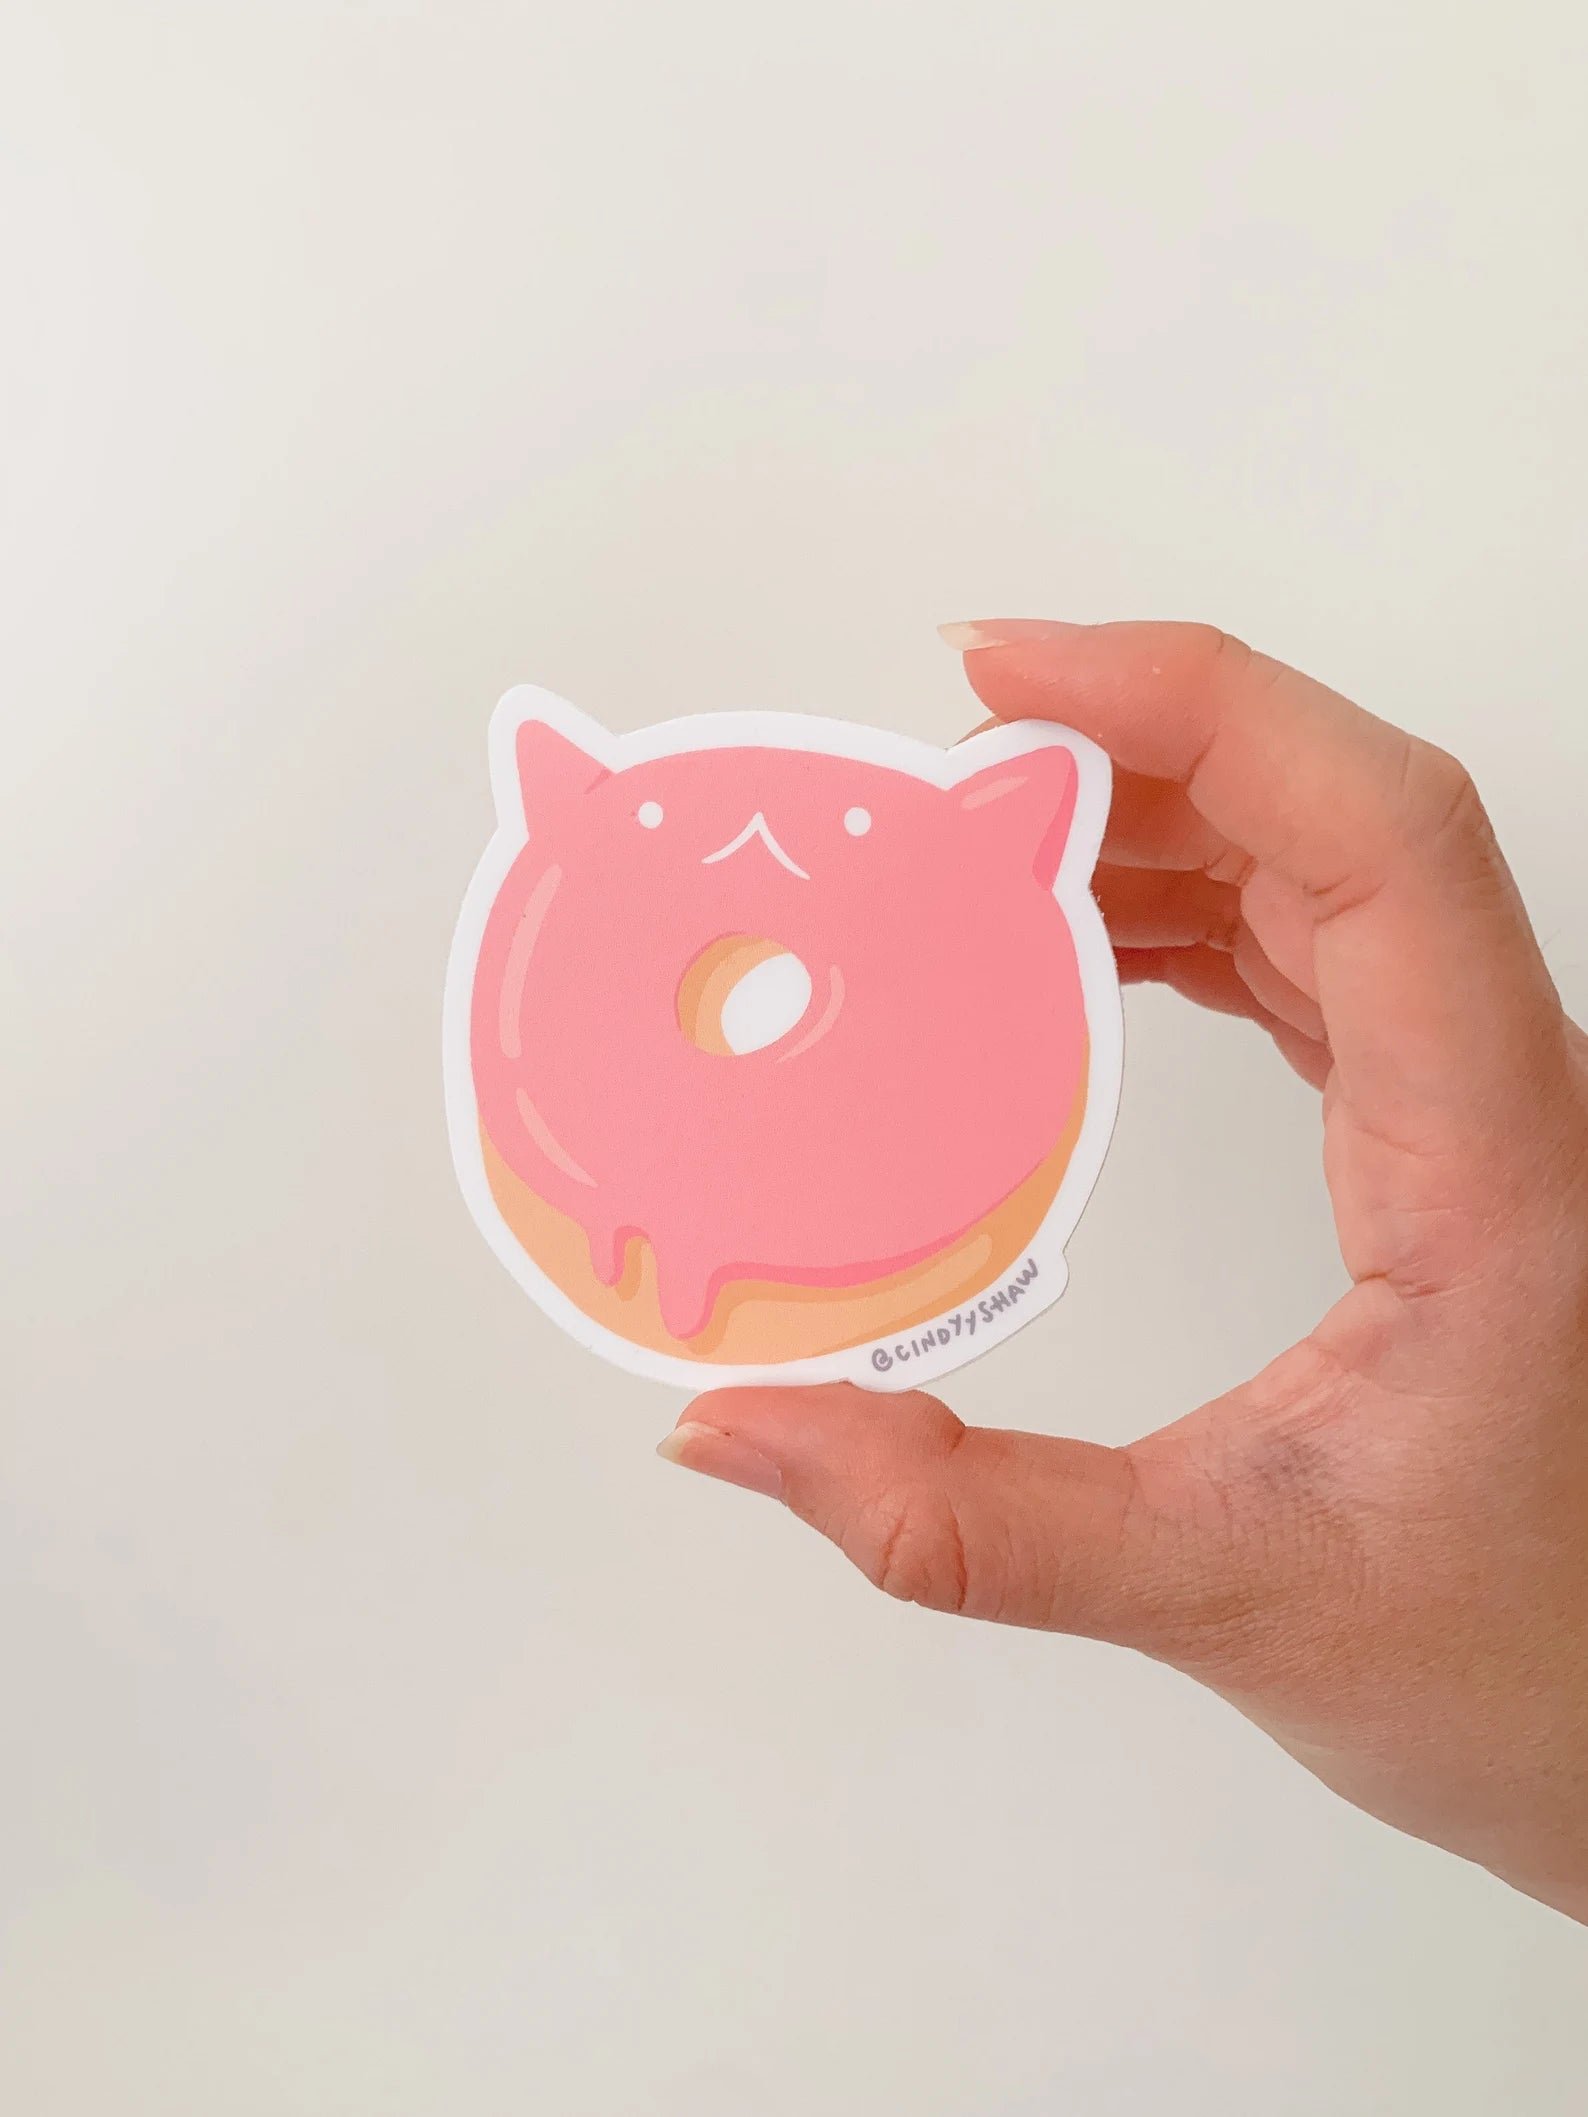 Cat Donut Sticker